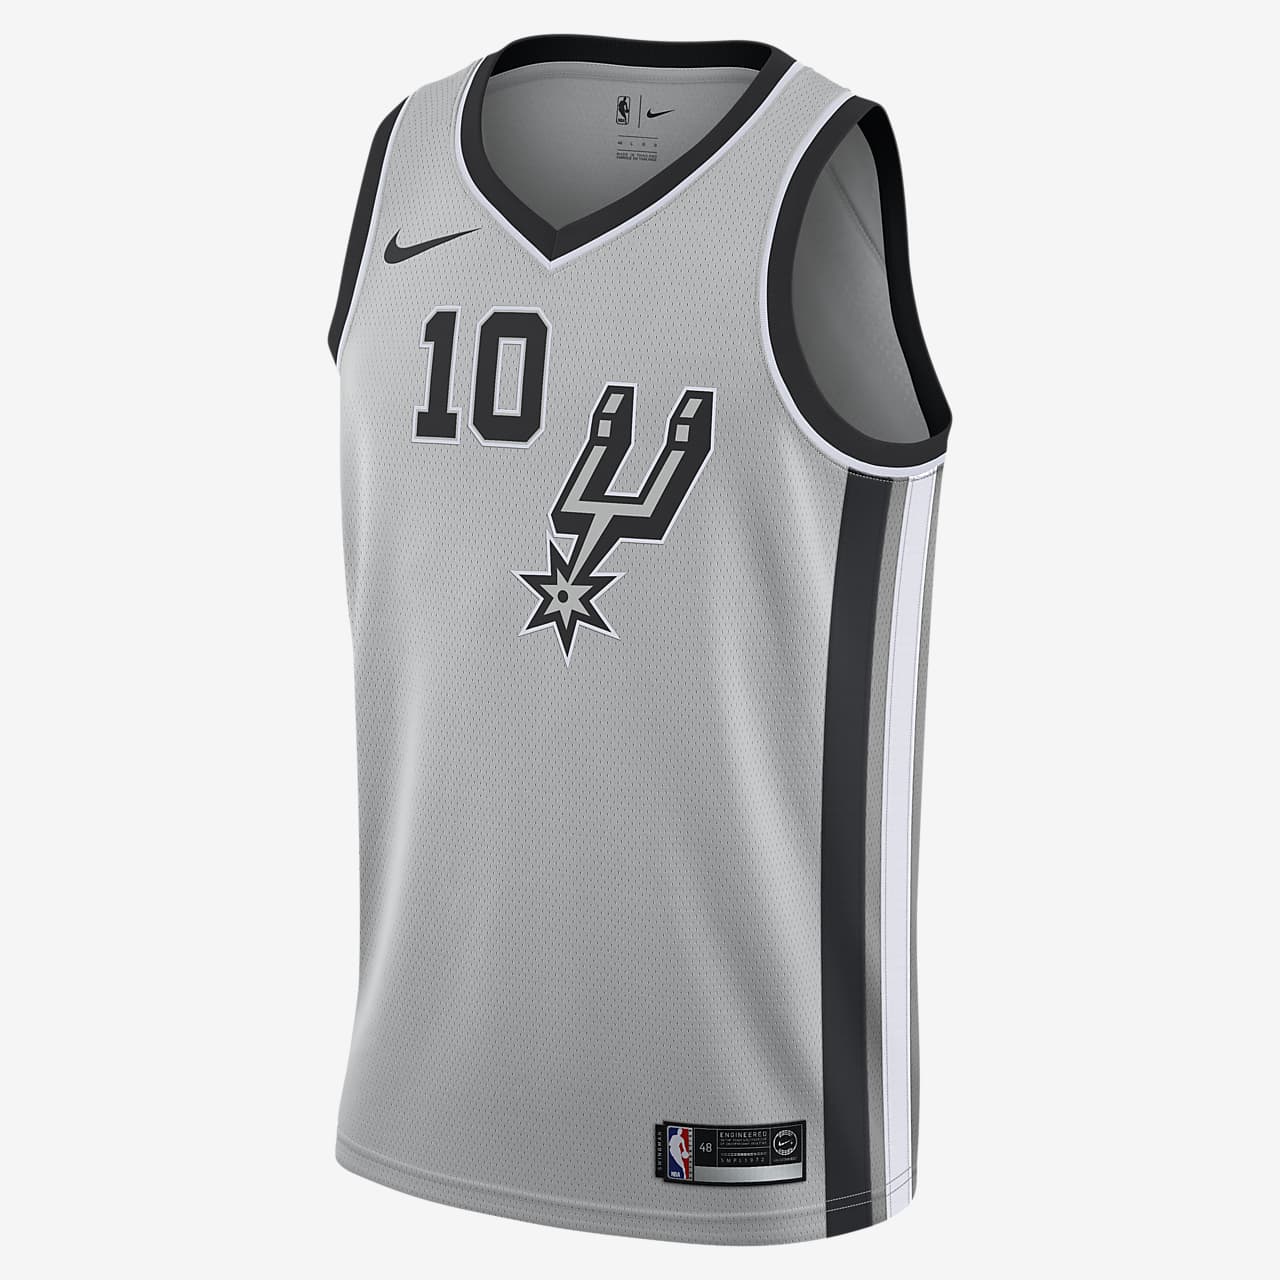 San Antonio Spurs Team Shop in NBA Fan Shop 